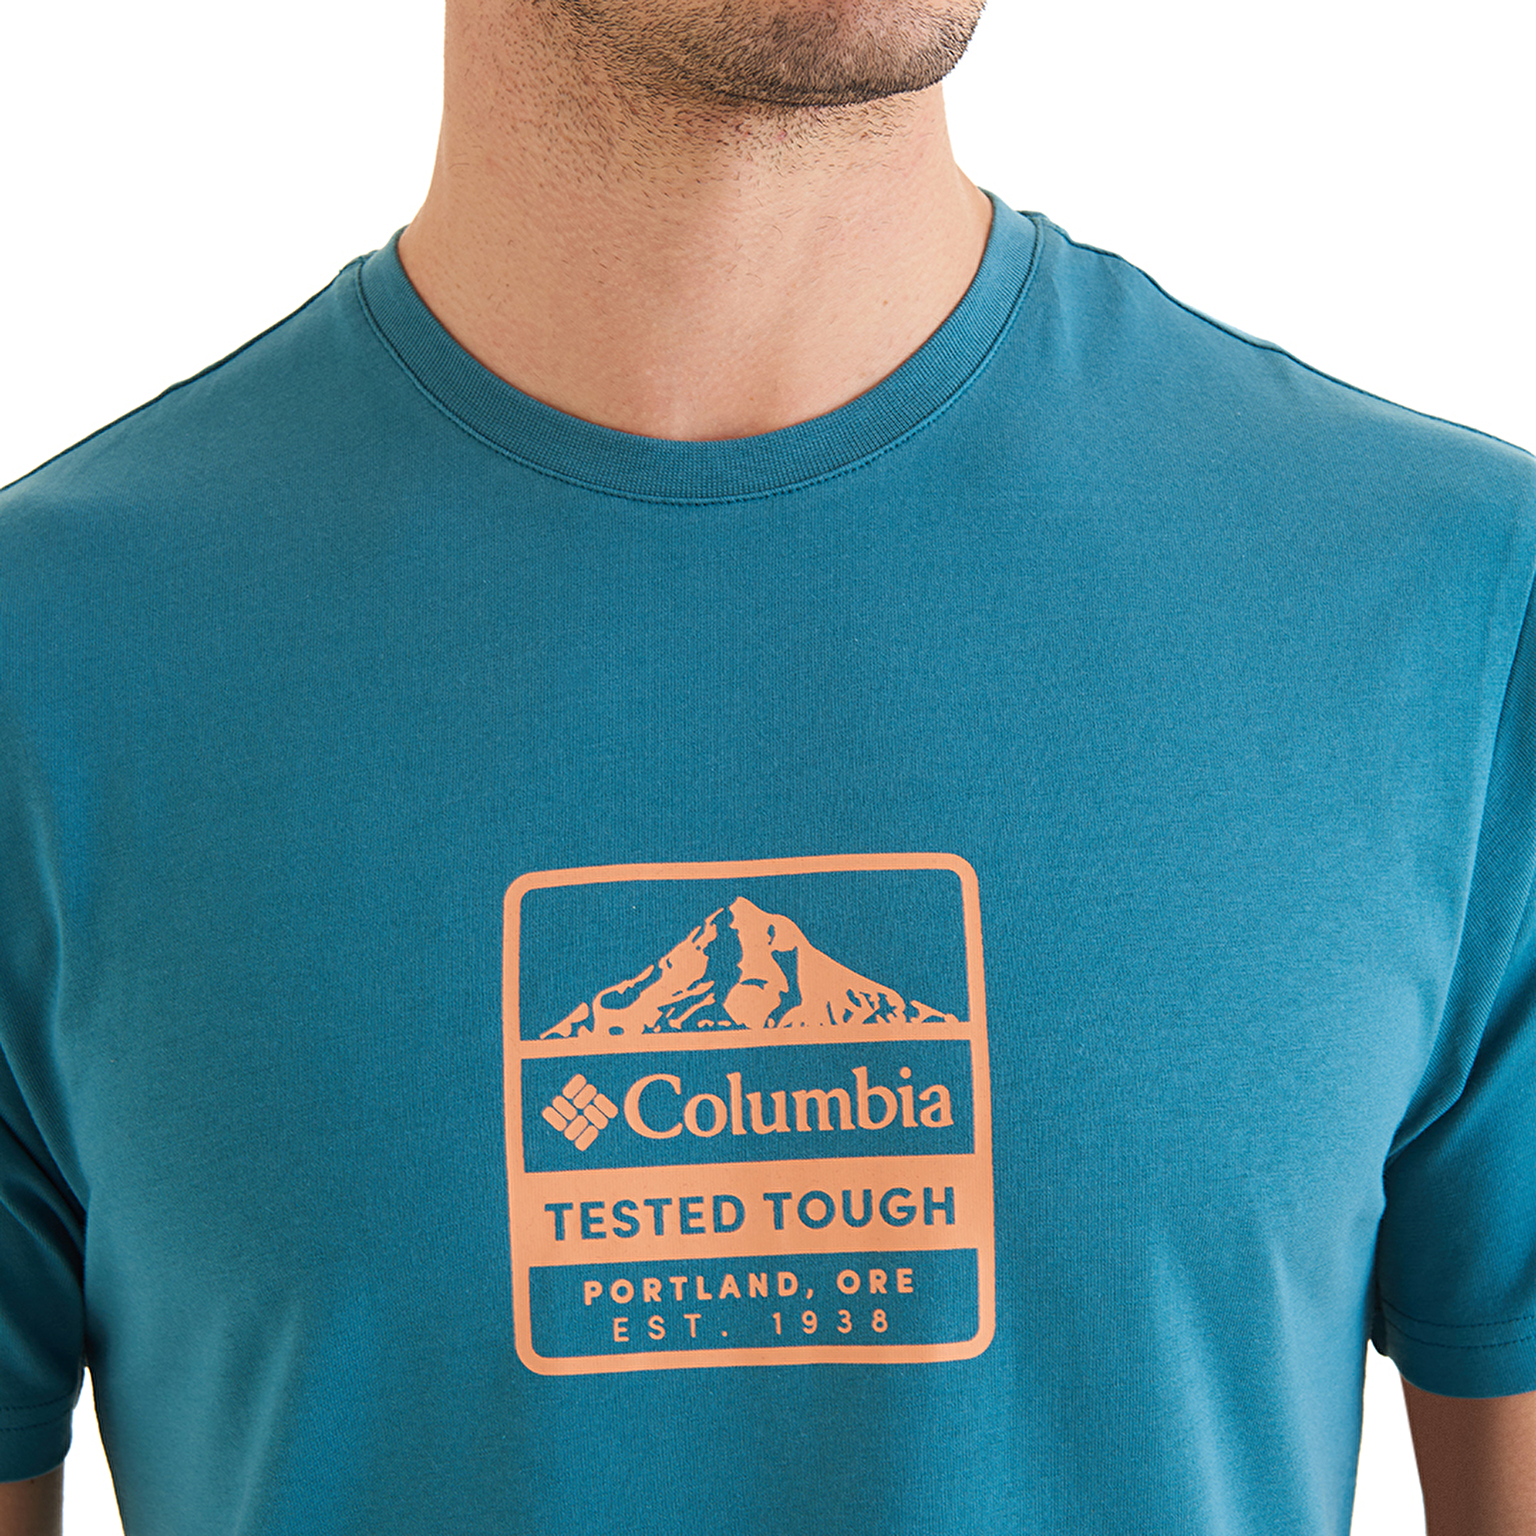 CSC Tested Tough PDX Erkek Kısa Kollu T-shirt